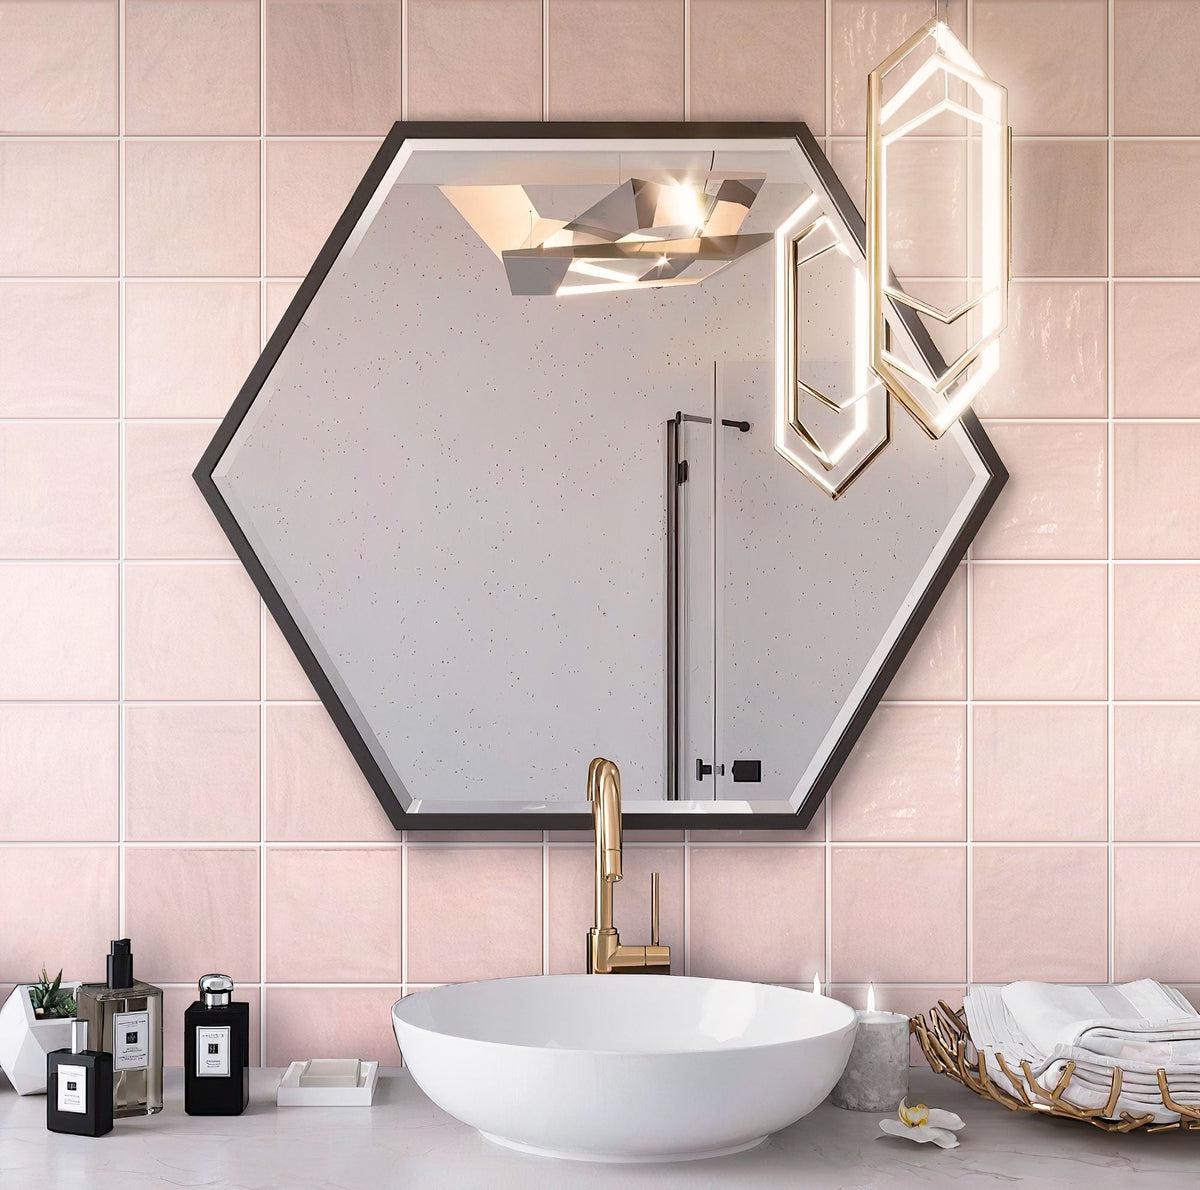 La Riviera Rose Pink Ceramic Square Backsplash in Moderm Poligonal Style Bathroom